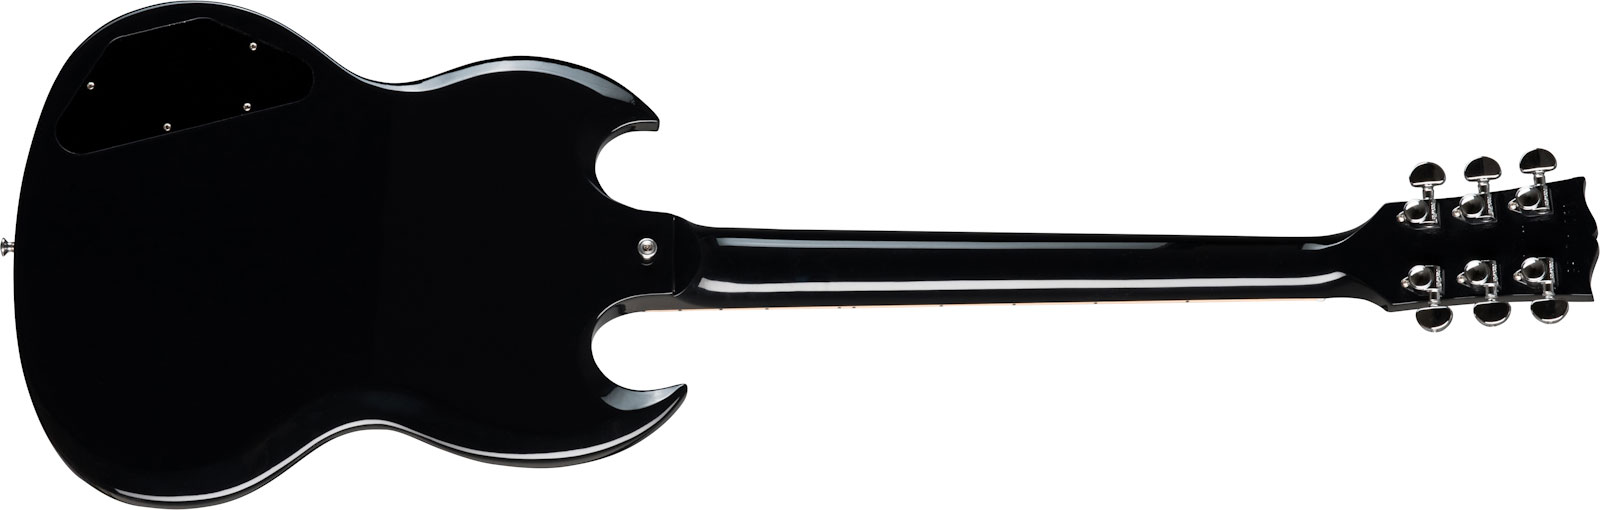 Gibson Sg Standard 2h Ht Rw - Ebony - Double cut electric guitar - Variation 1